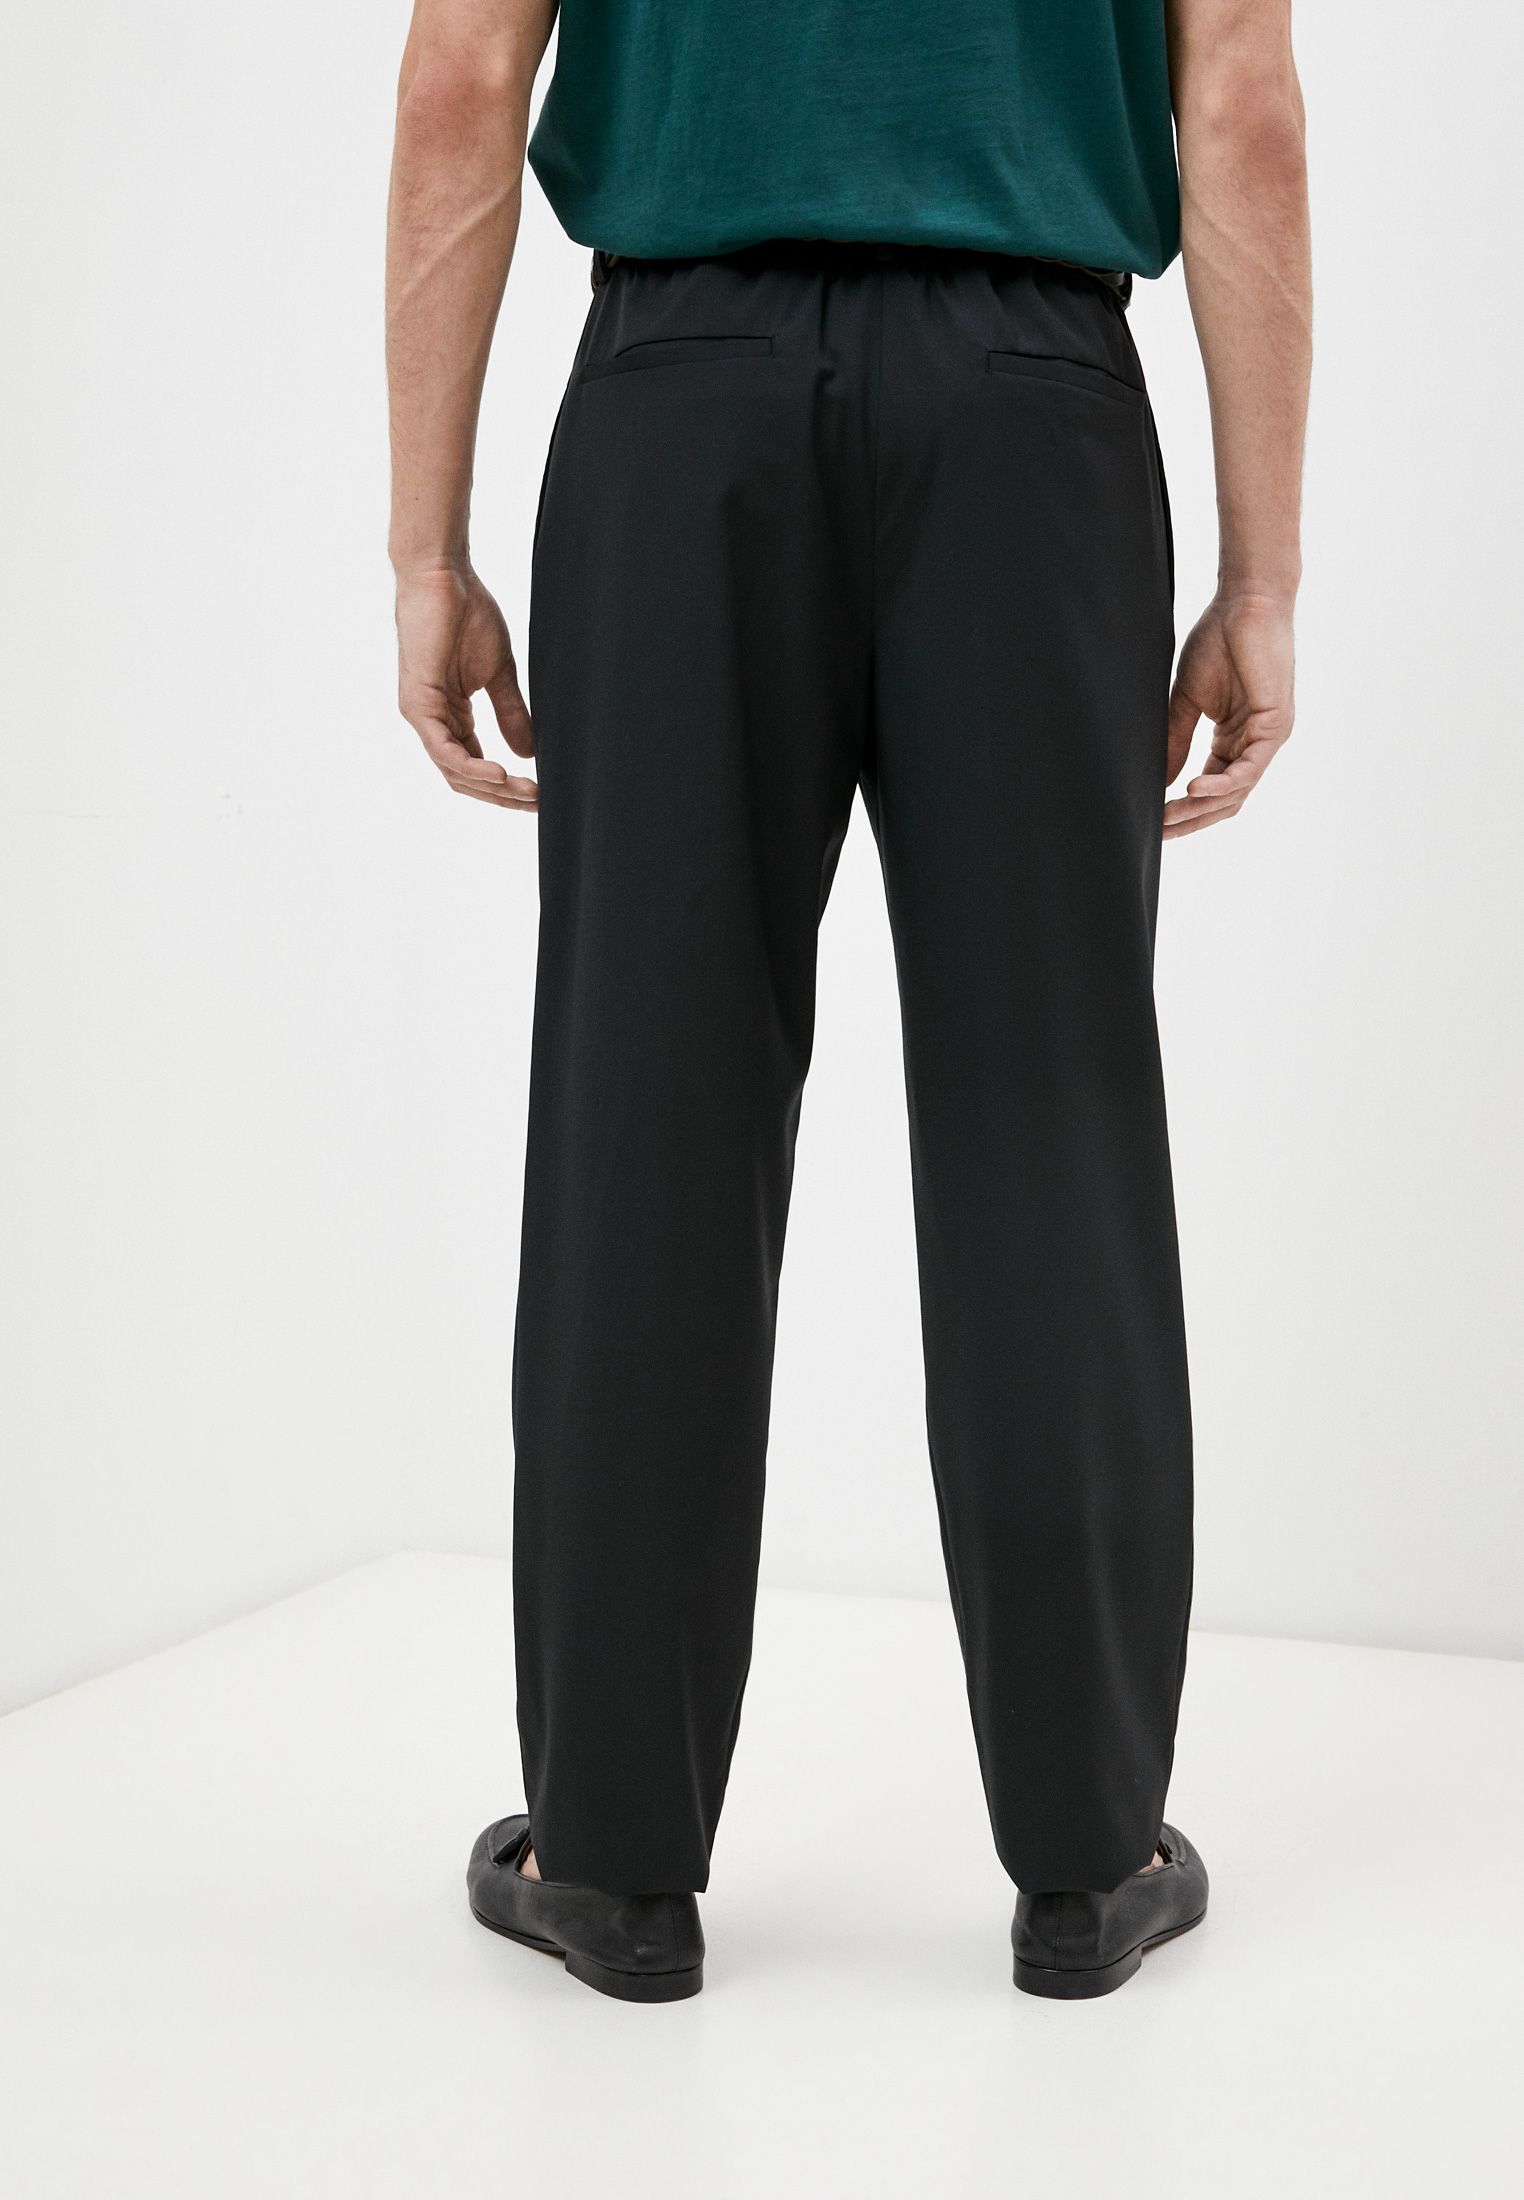 Мужские классические брюки Emporio Armani (Эмпорио Армани) W1P220 W1027: изображение 4